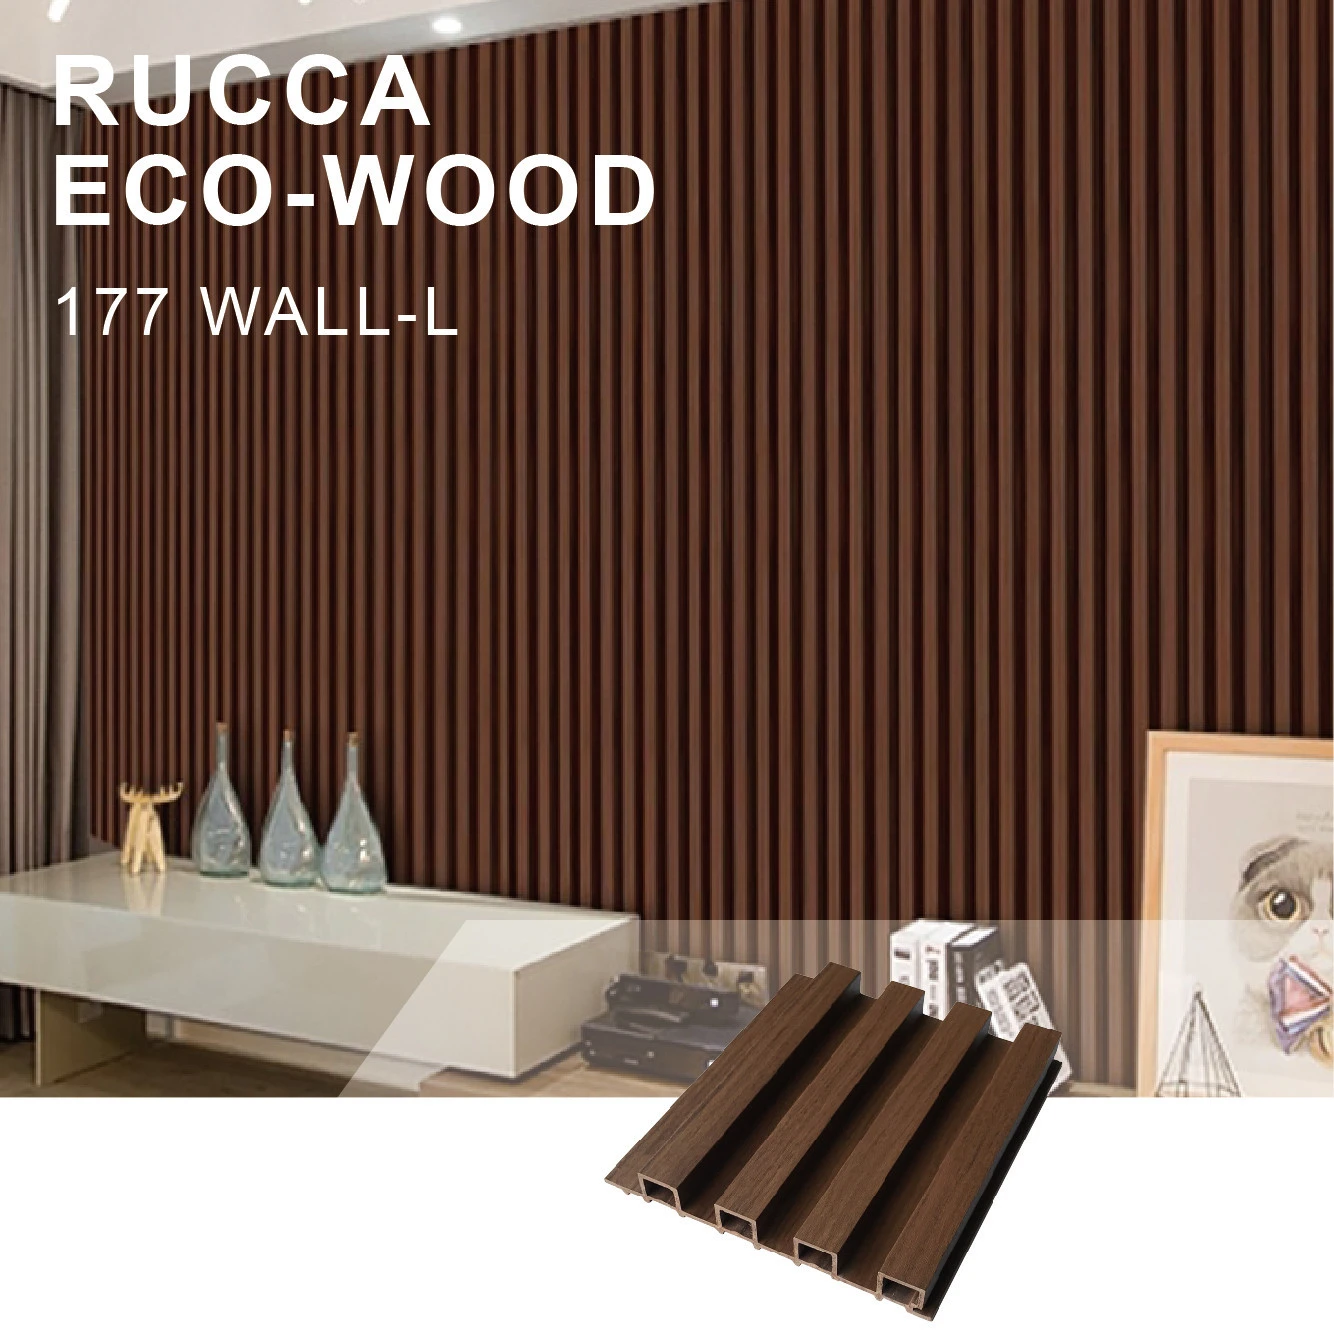 Rucca wood plastic composite wall panels, interior decoration for prefab homes, 177*21.5mm building materials